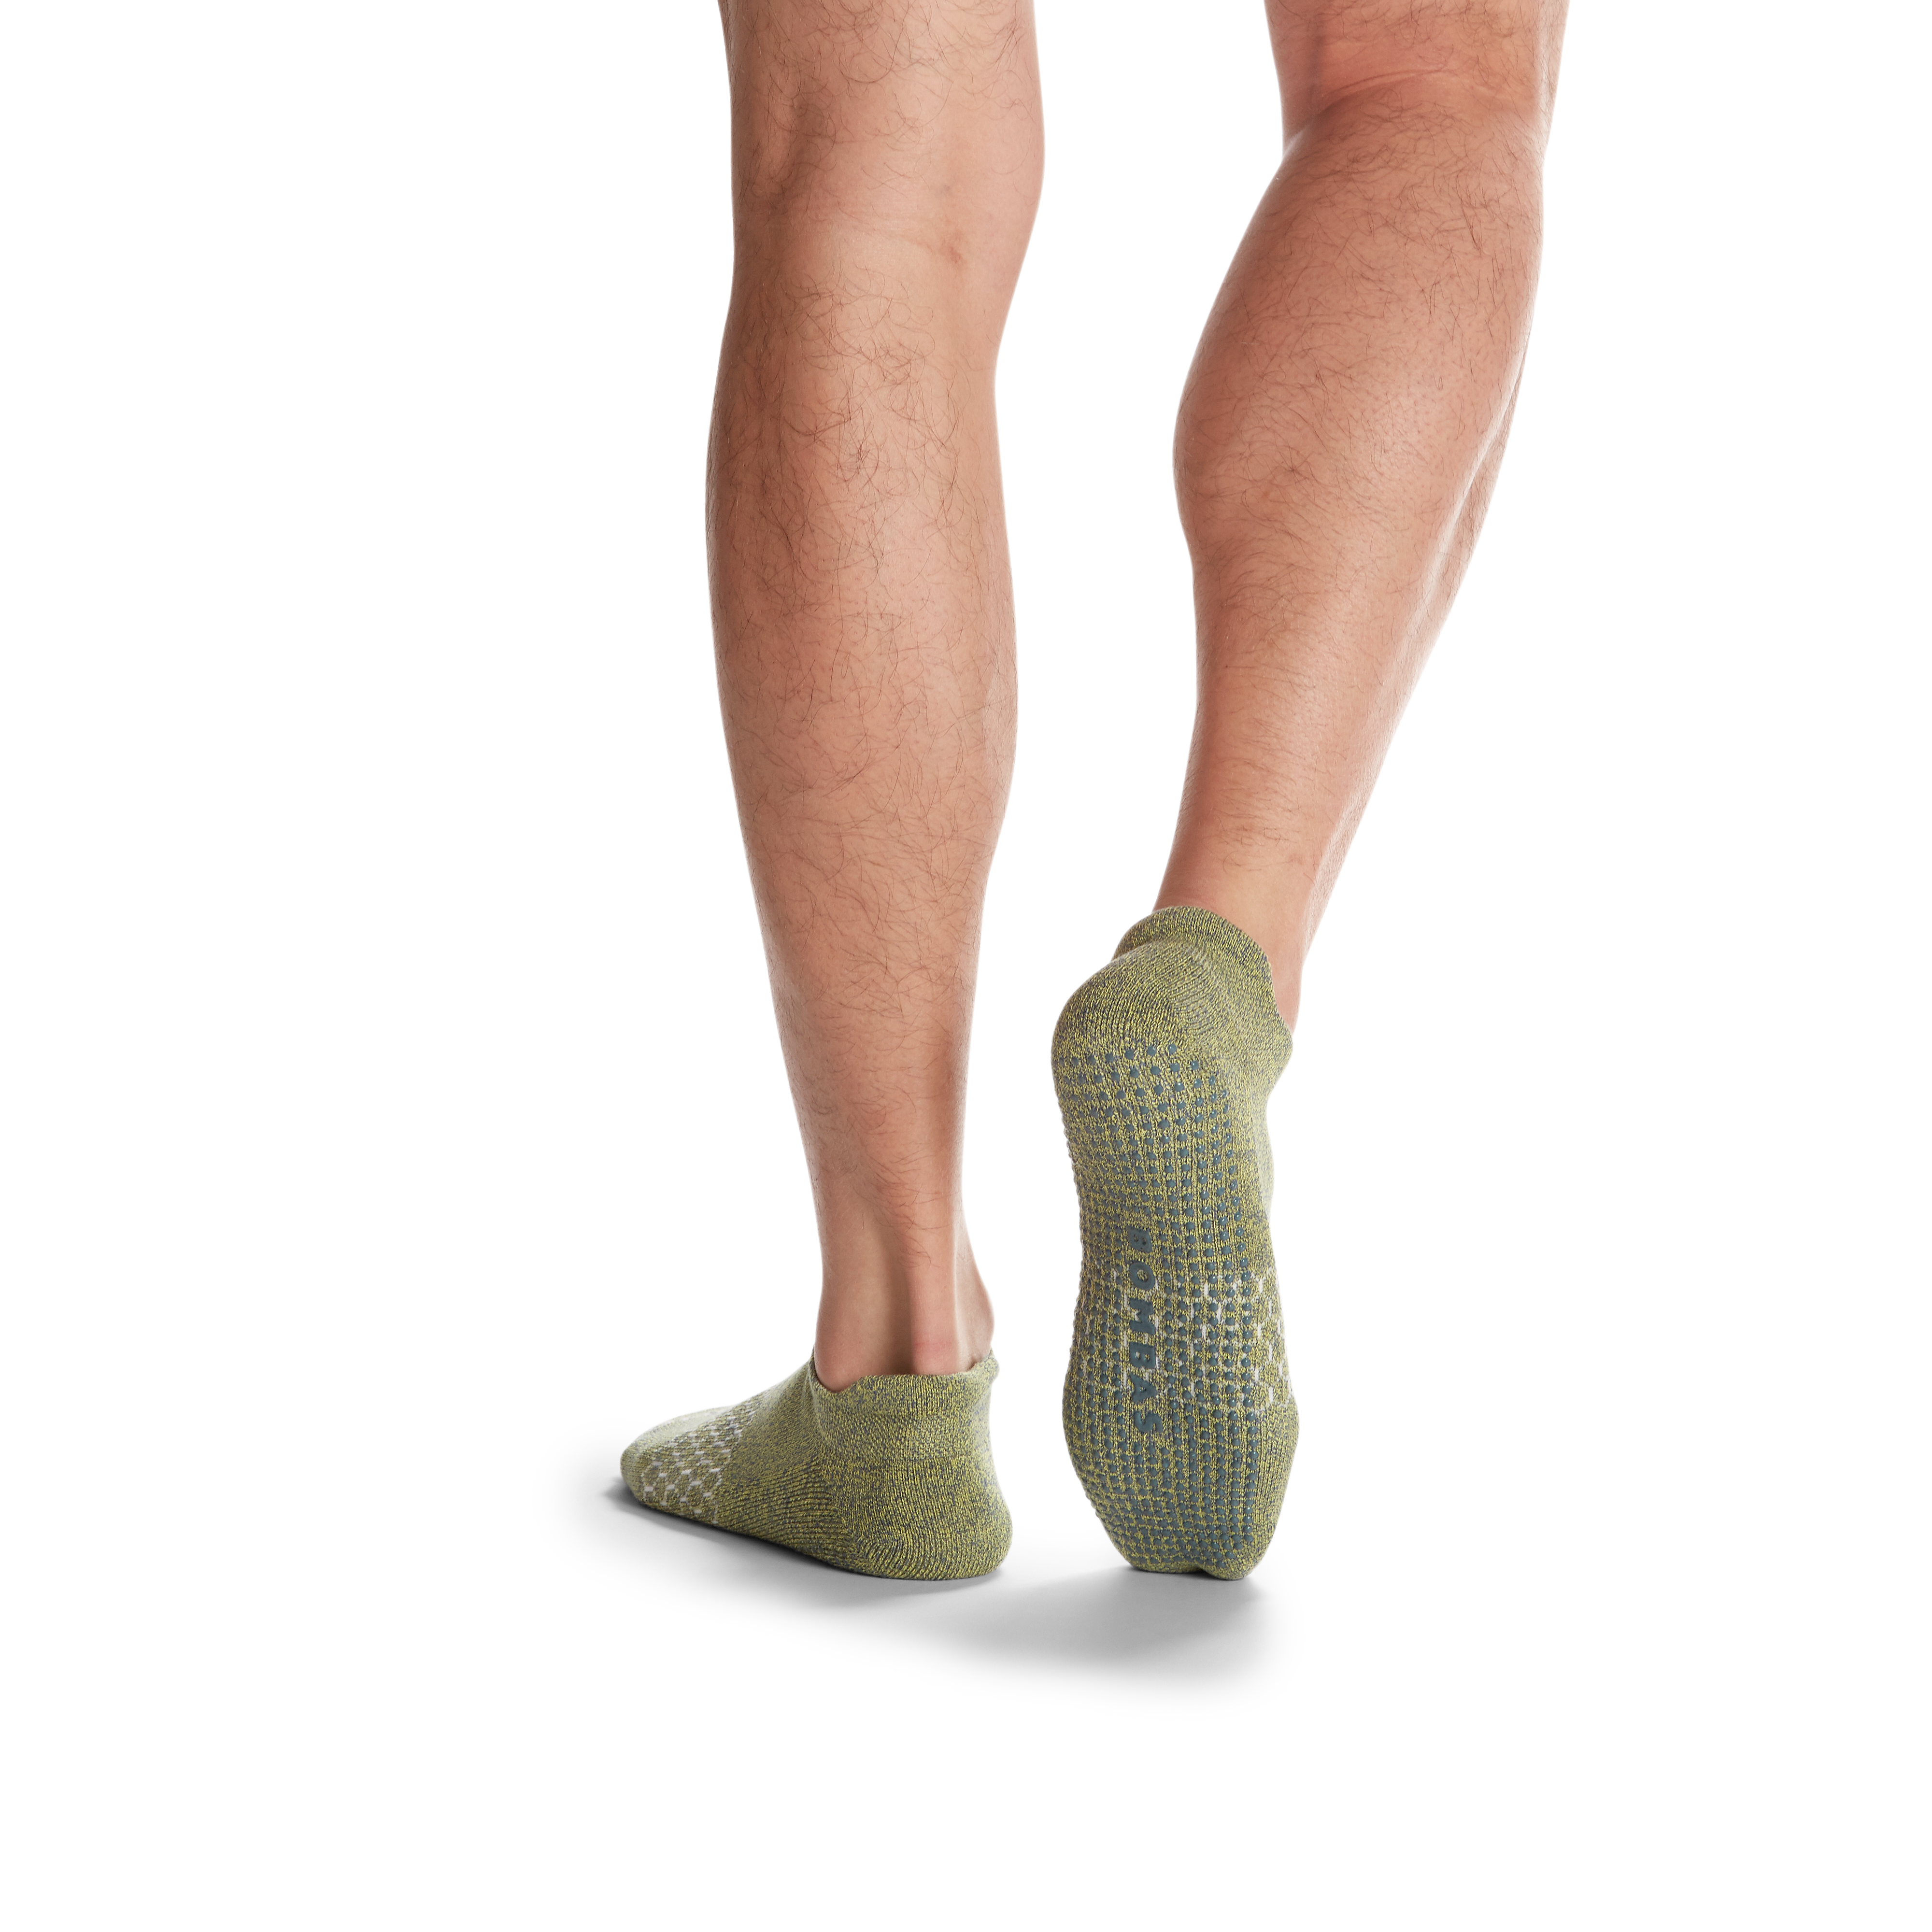 BOMBAS GRIPPER ANKLE Sock Barre&Yoga &Pilates socks Seamless Toe 4 pairs  size M $26.95 - PicClick AU